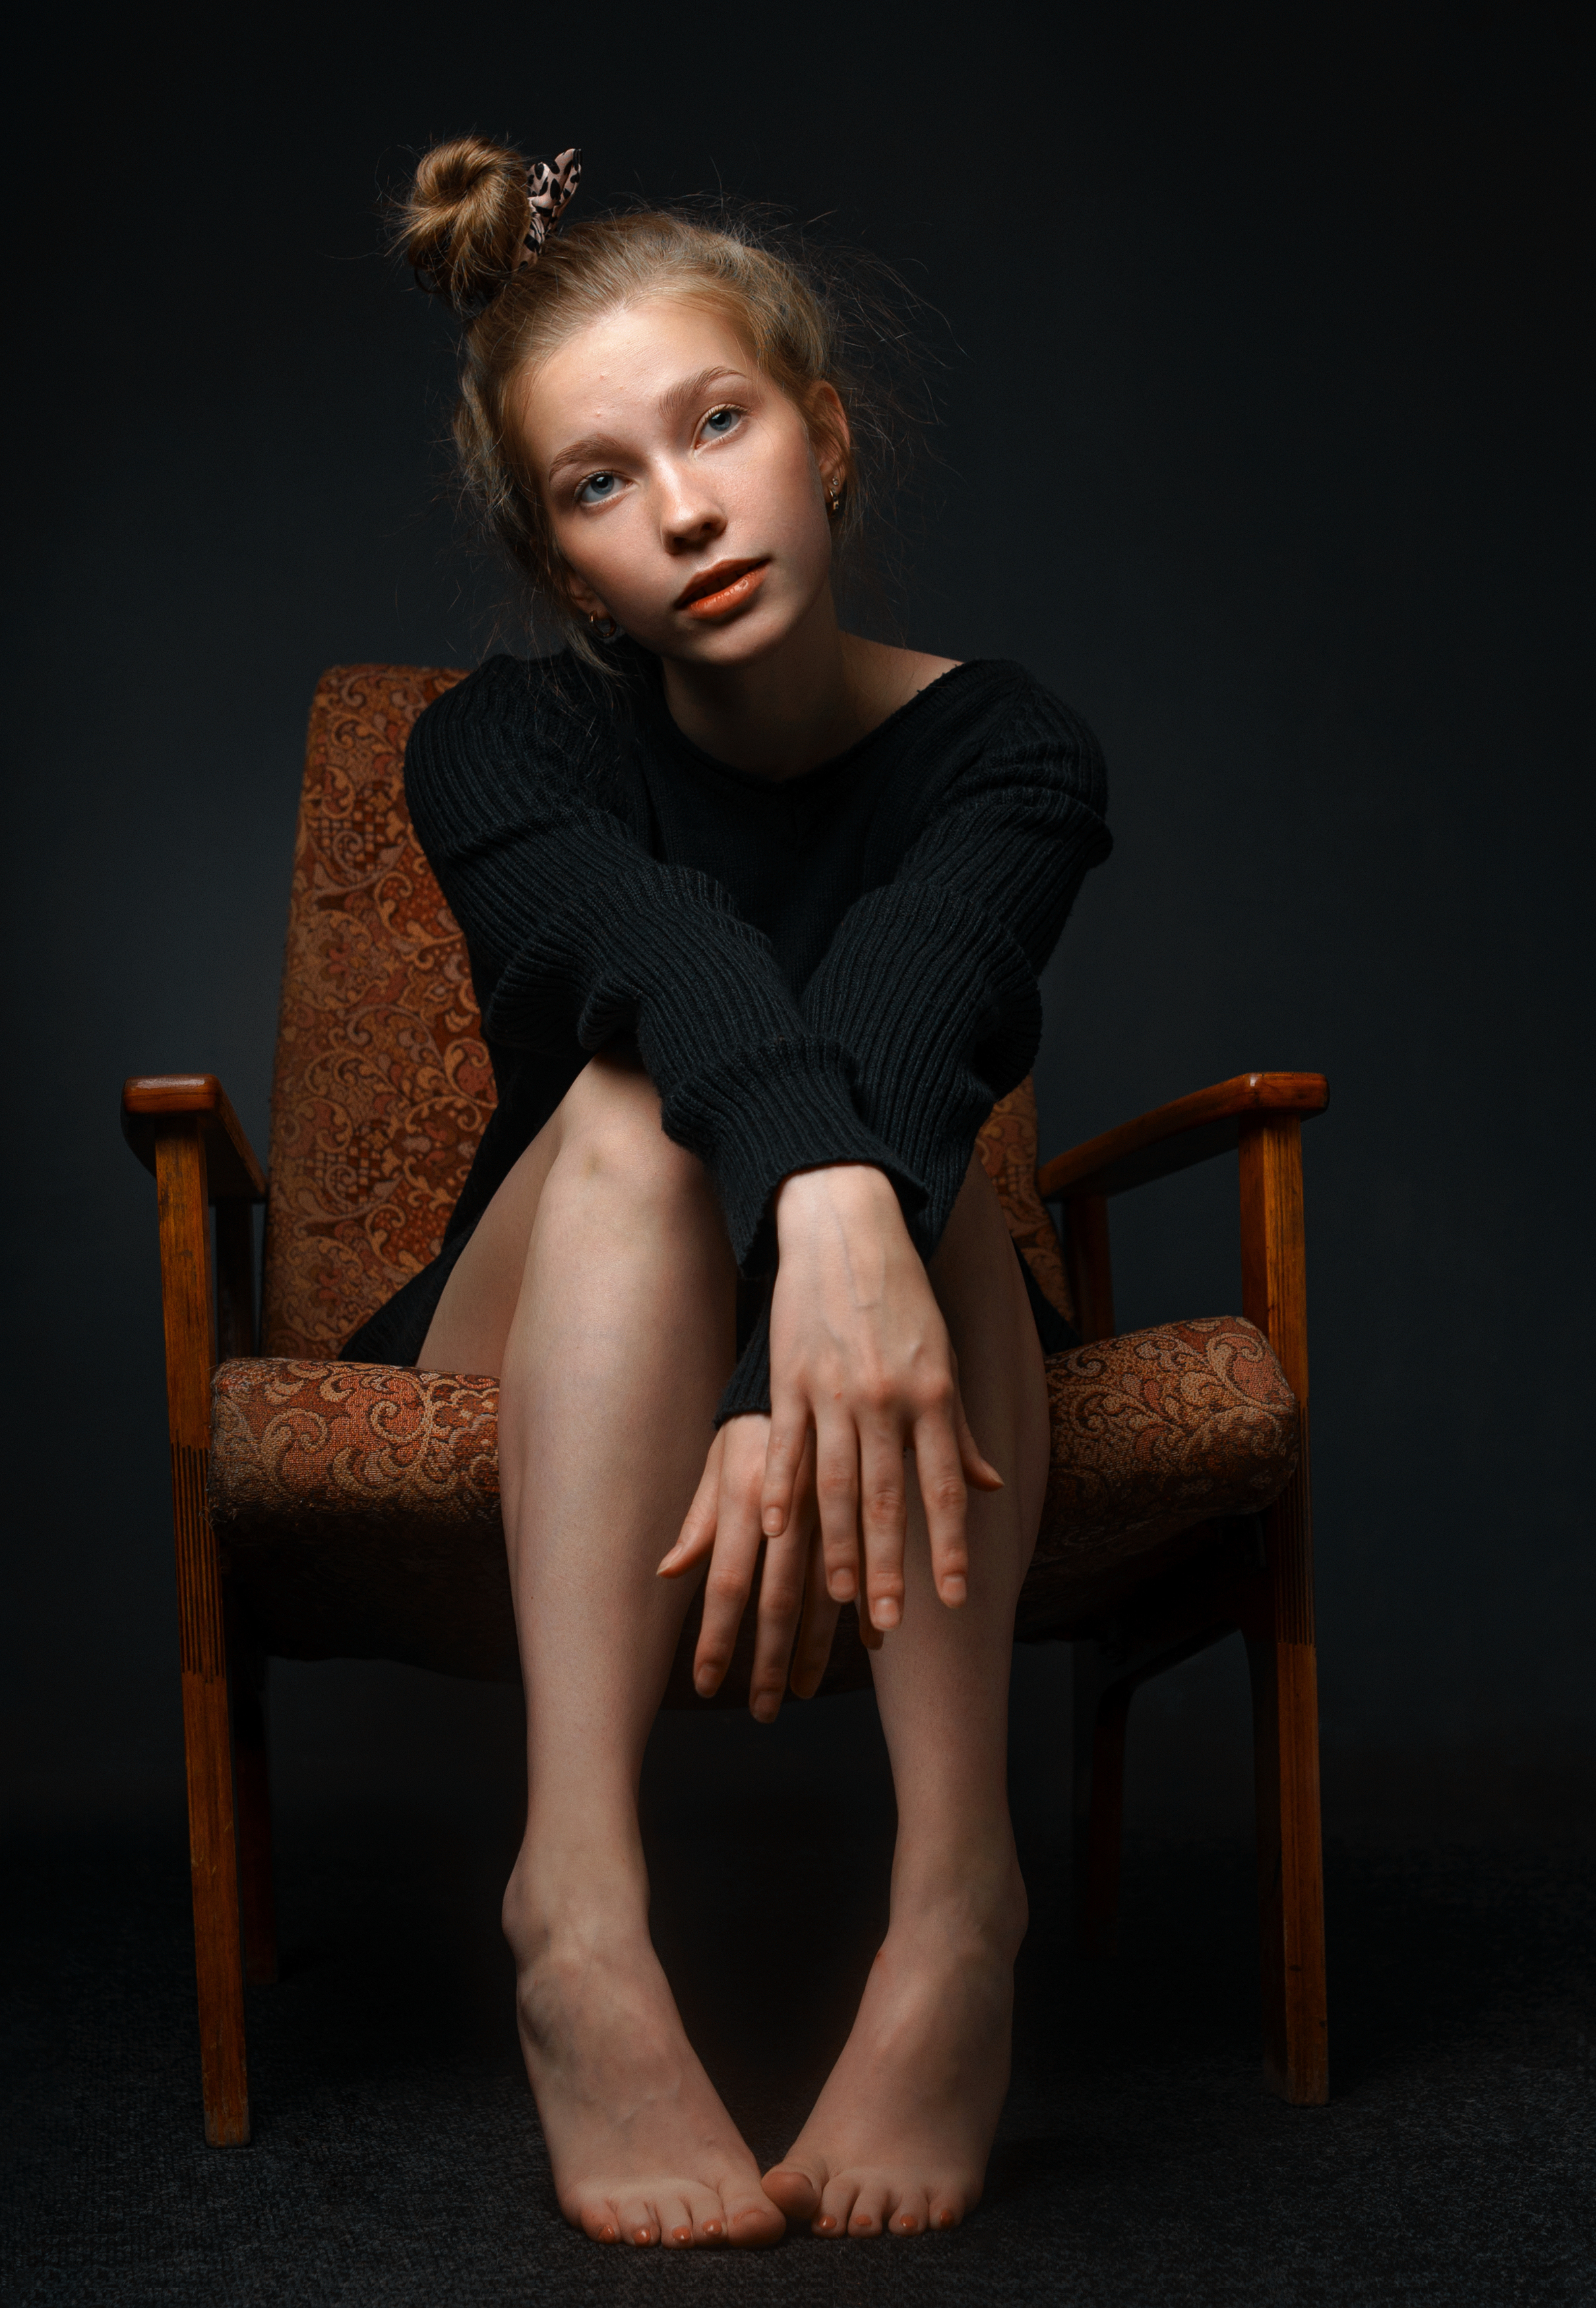 Aleksey Gurylev Women Hairbun Black Clothing Barefoot Chair 2420x3500